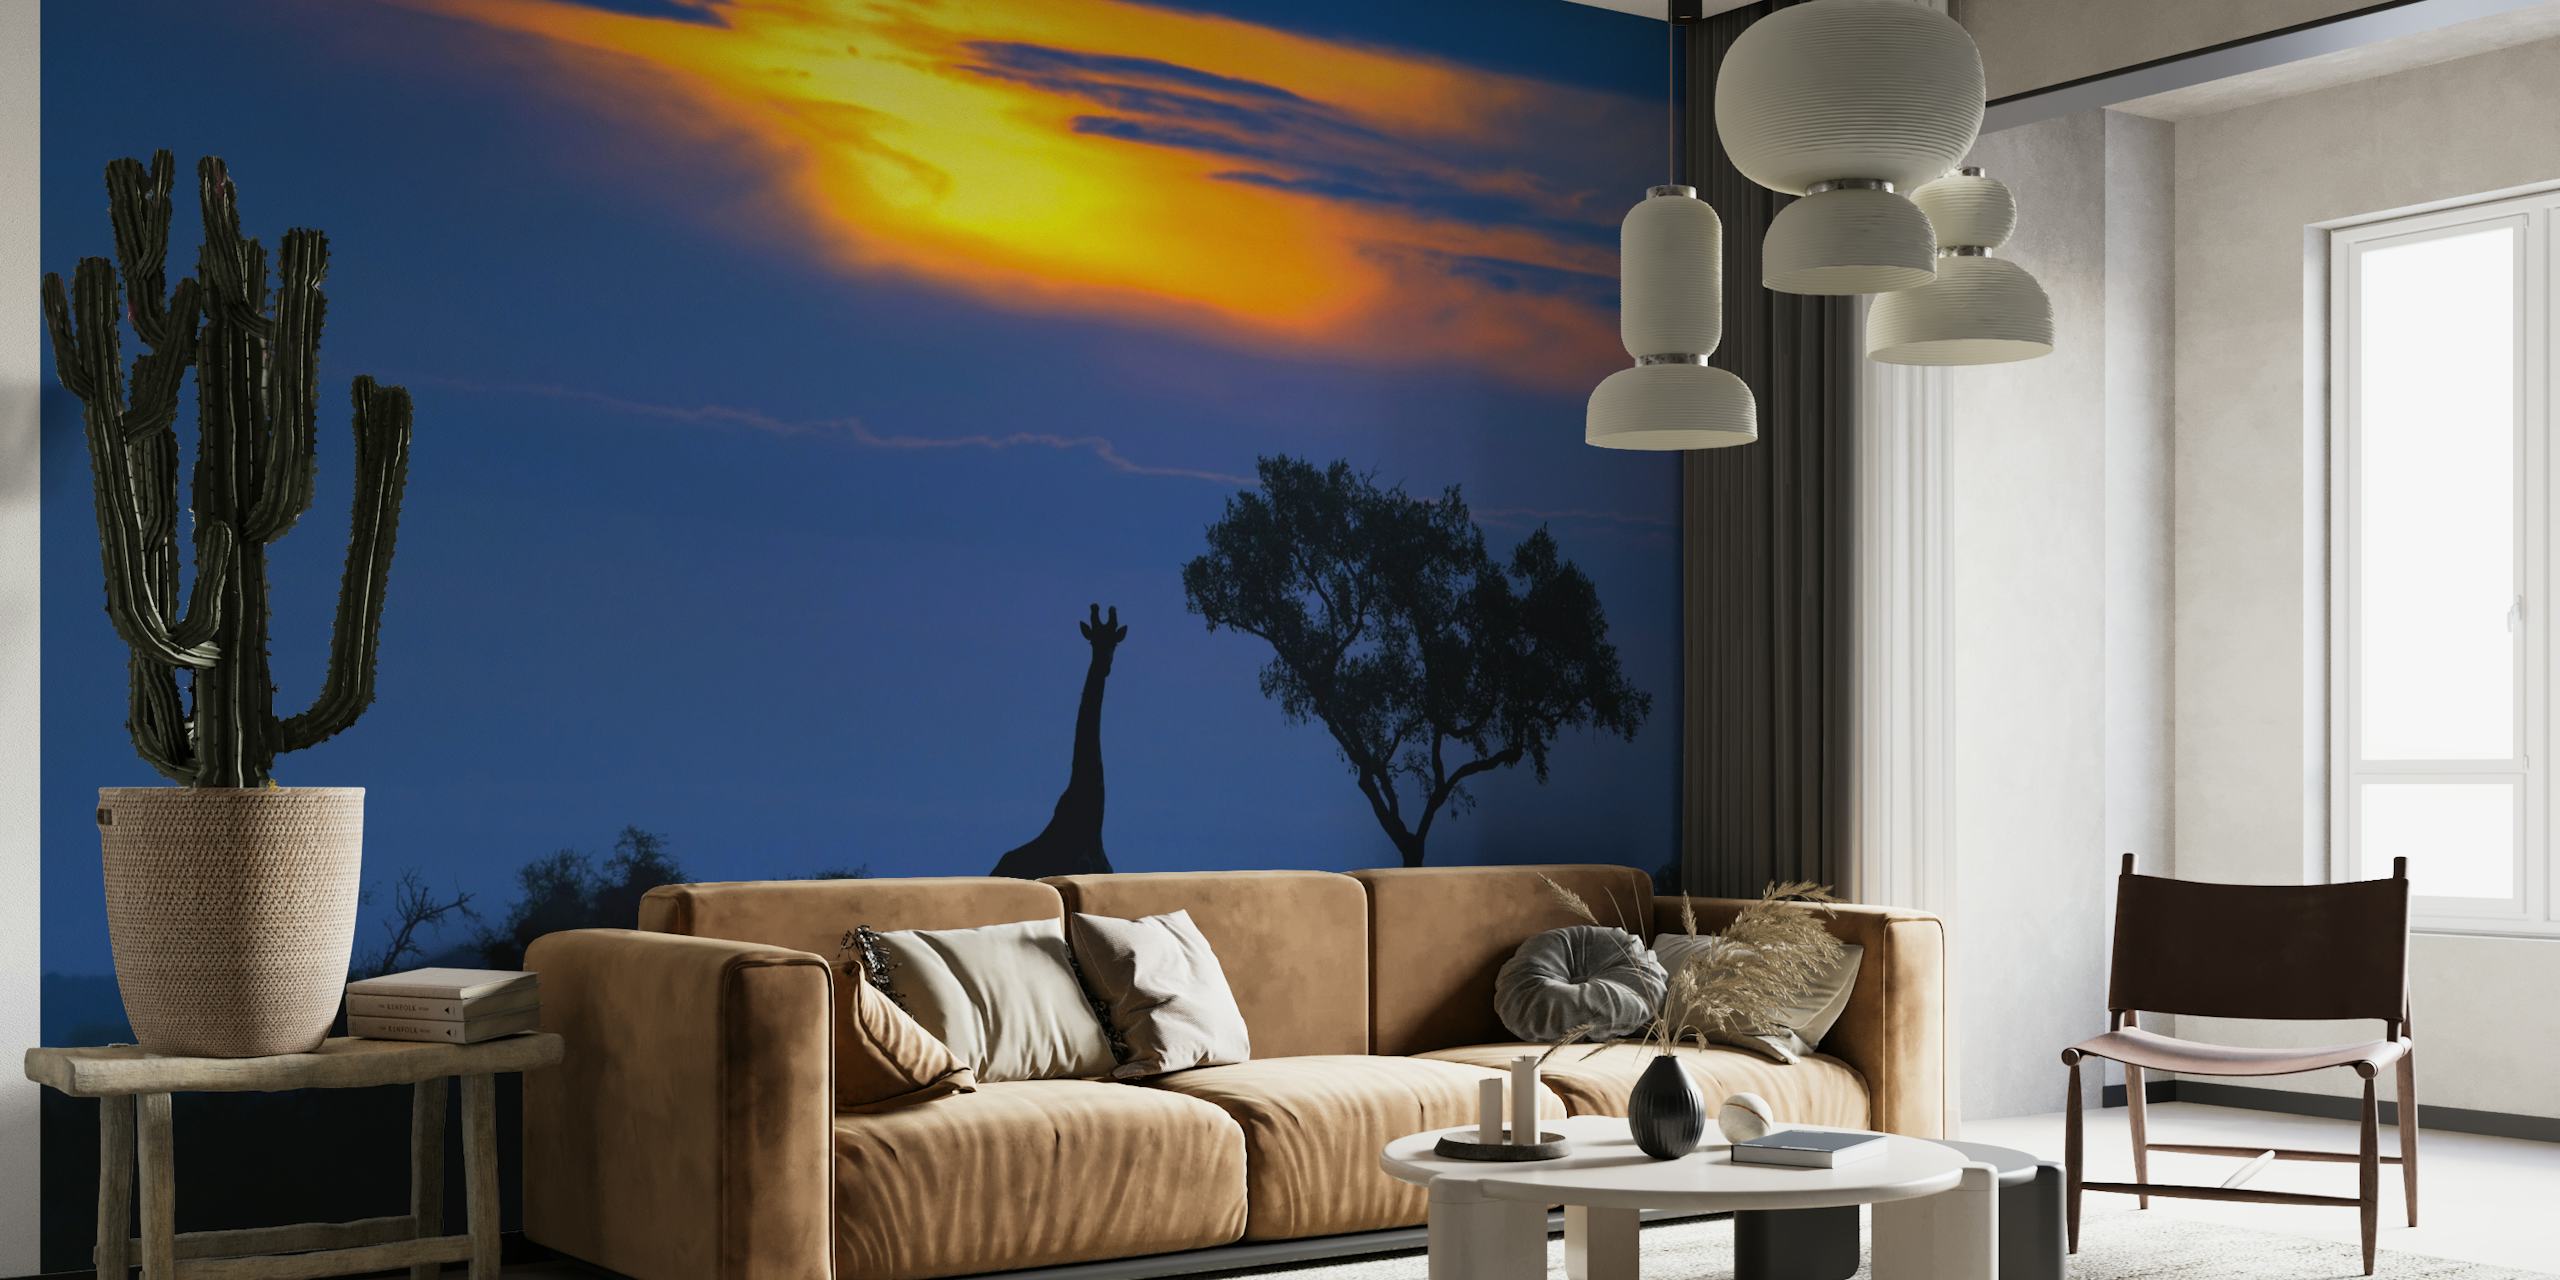 Giraffe silhouette against a vibrant sunset sky wall mural